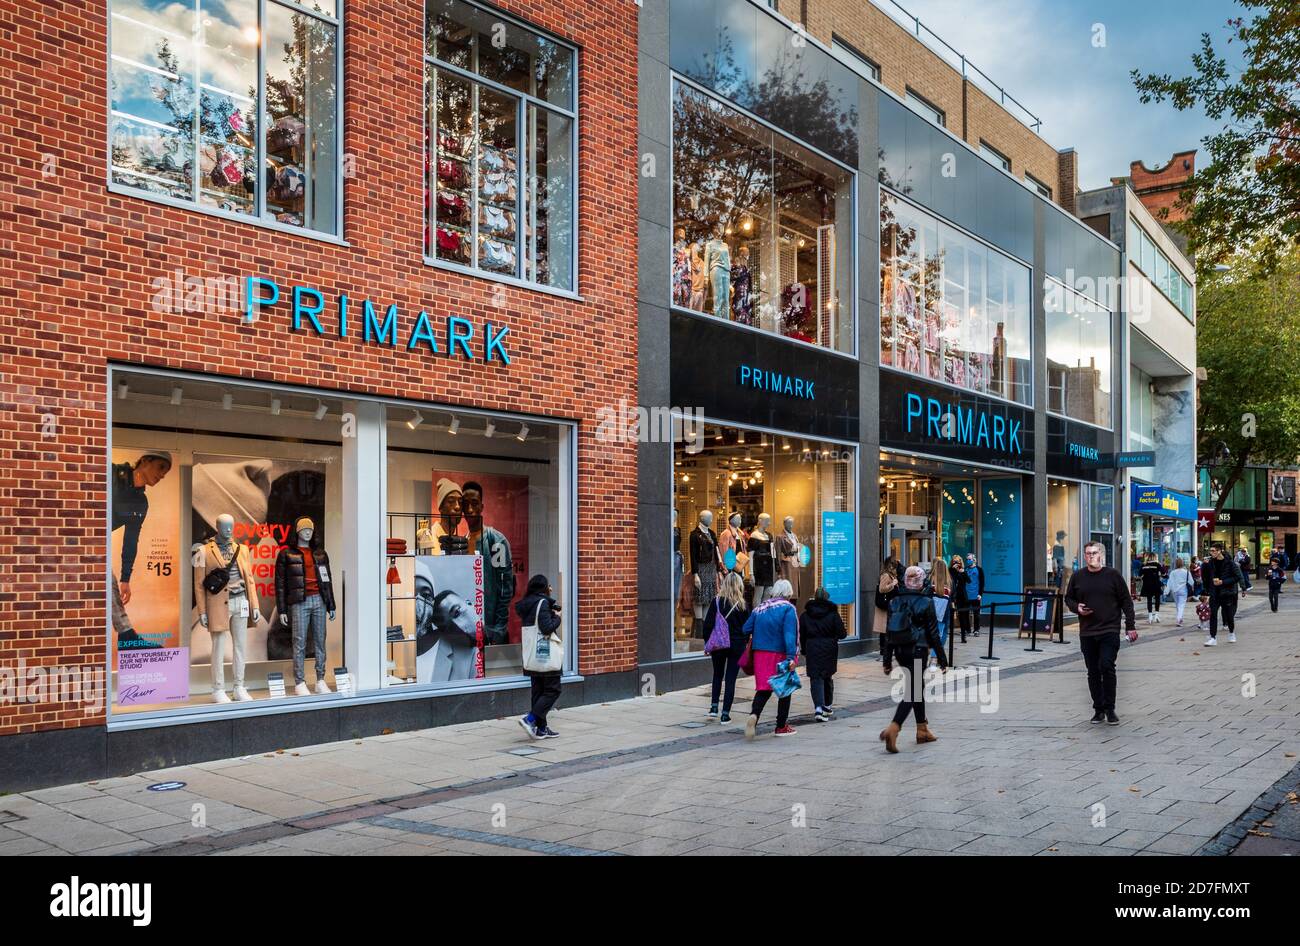 Primark Fashion Store in Norwich Norfolk UK. Primark is an Irish fast fashion retailer headquartered in Dublin. Stock Photo